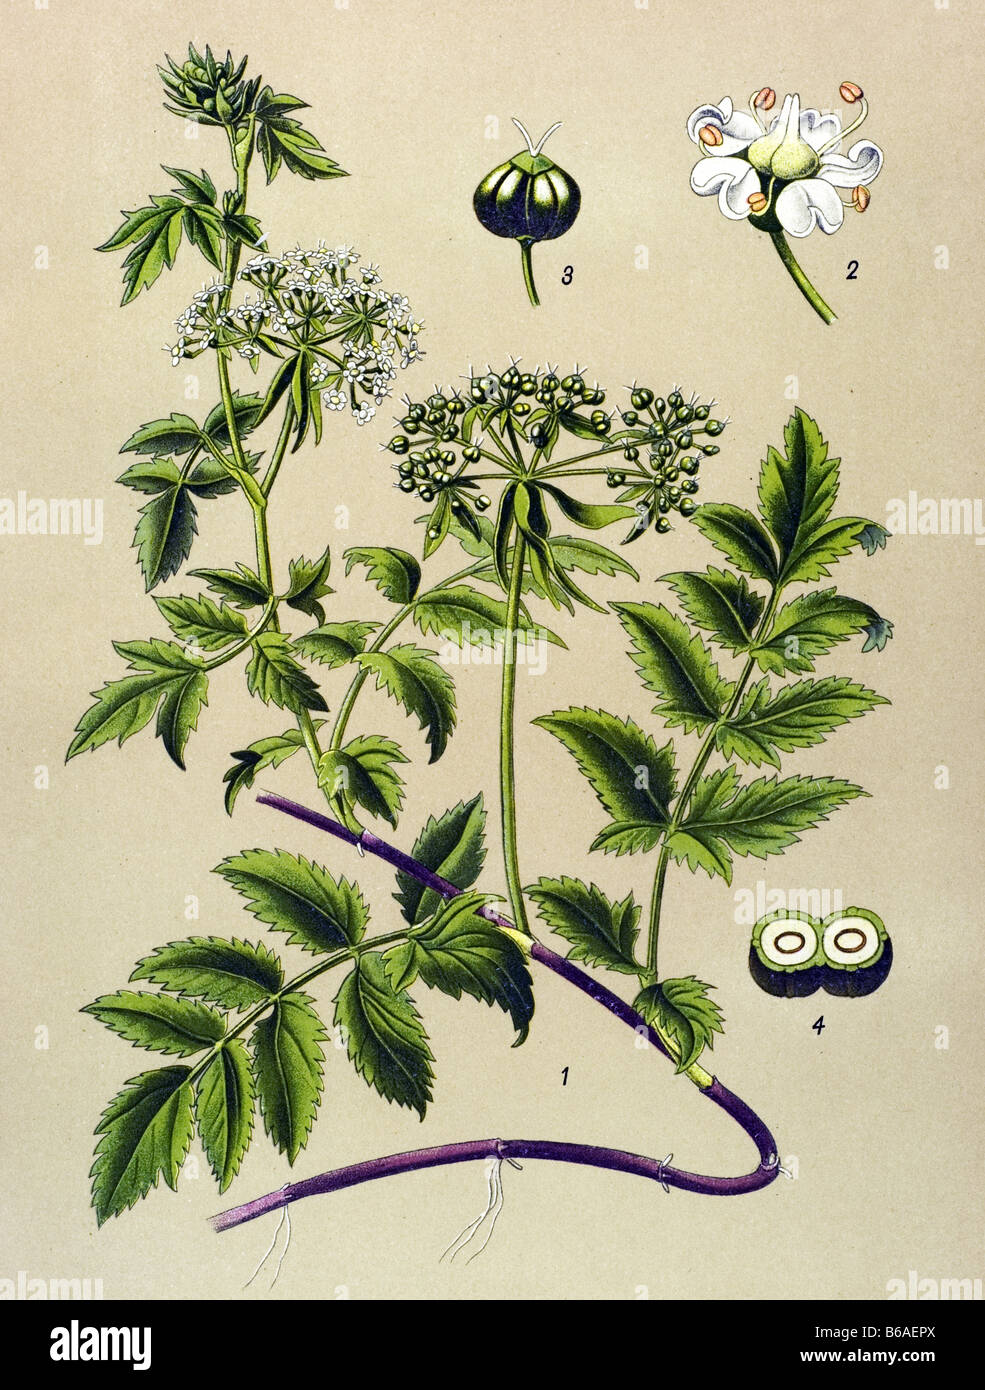 Berula angustifolia poisonous plants illustrations Stock Photo